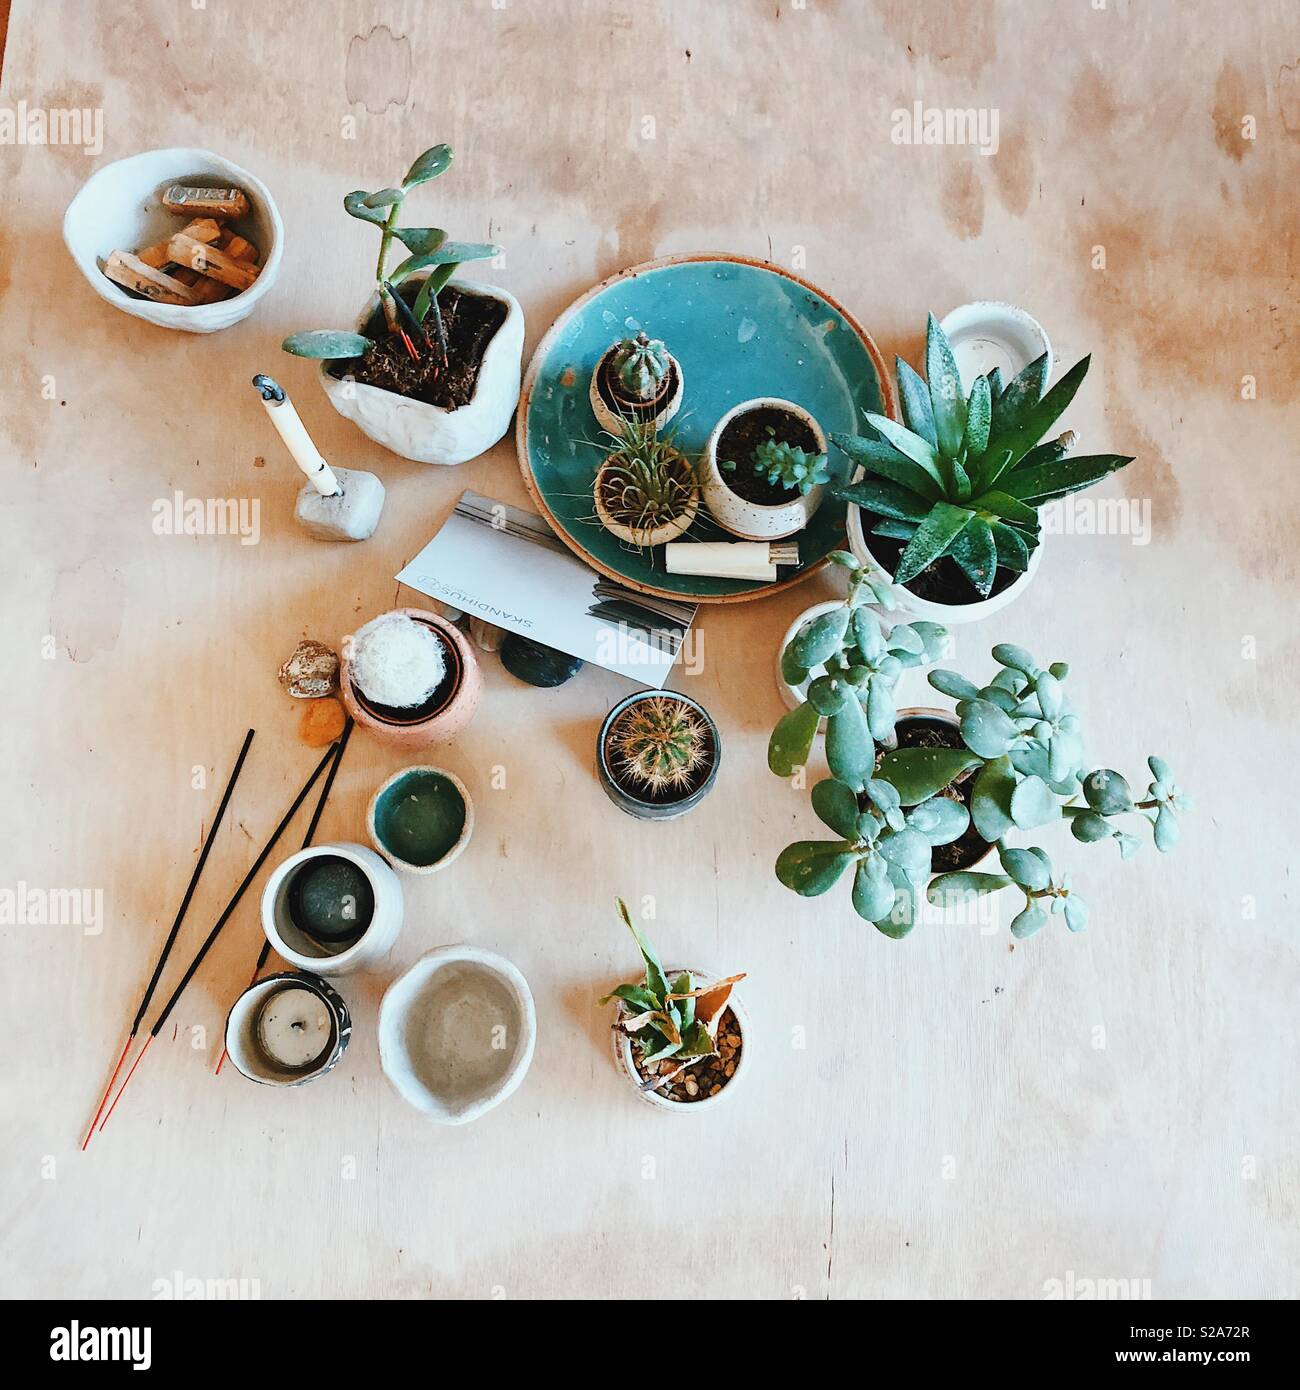 Scandinavian flatlay featuring handmade pottery and plants Stock Photo